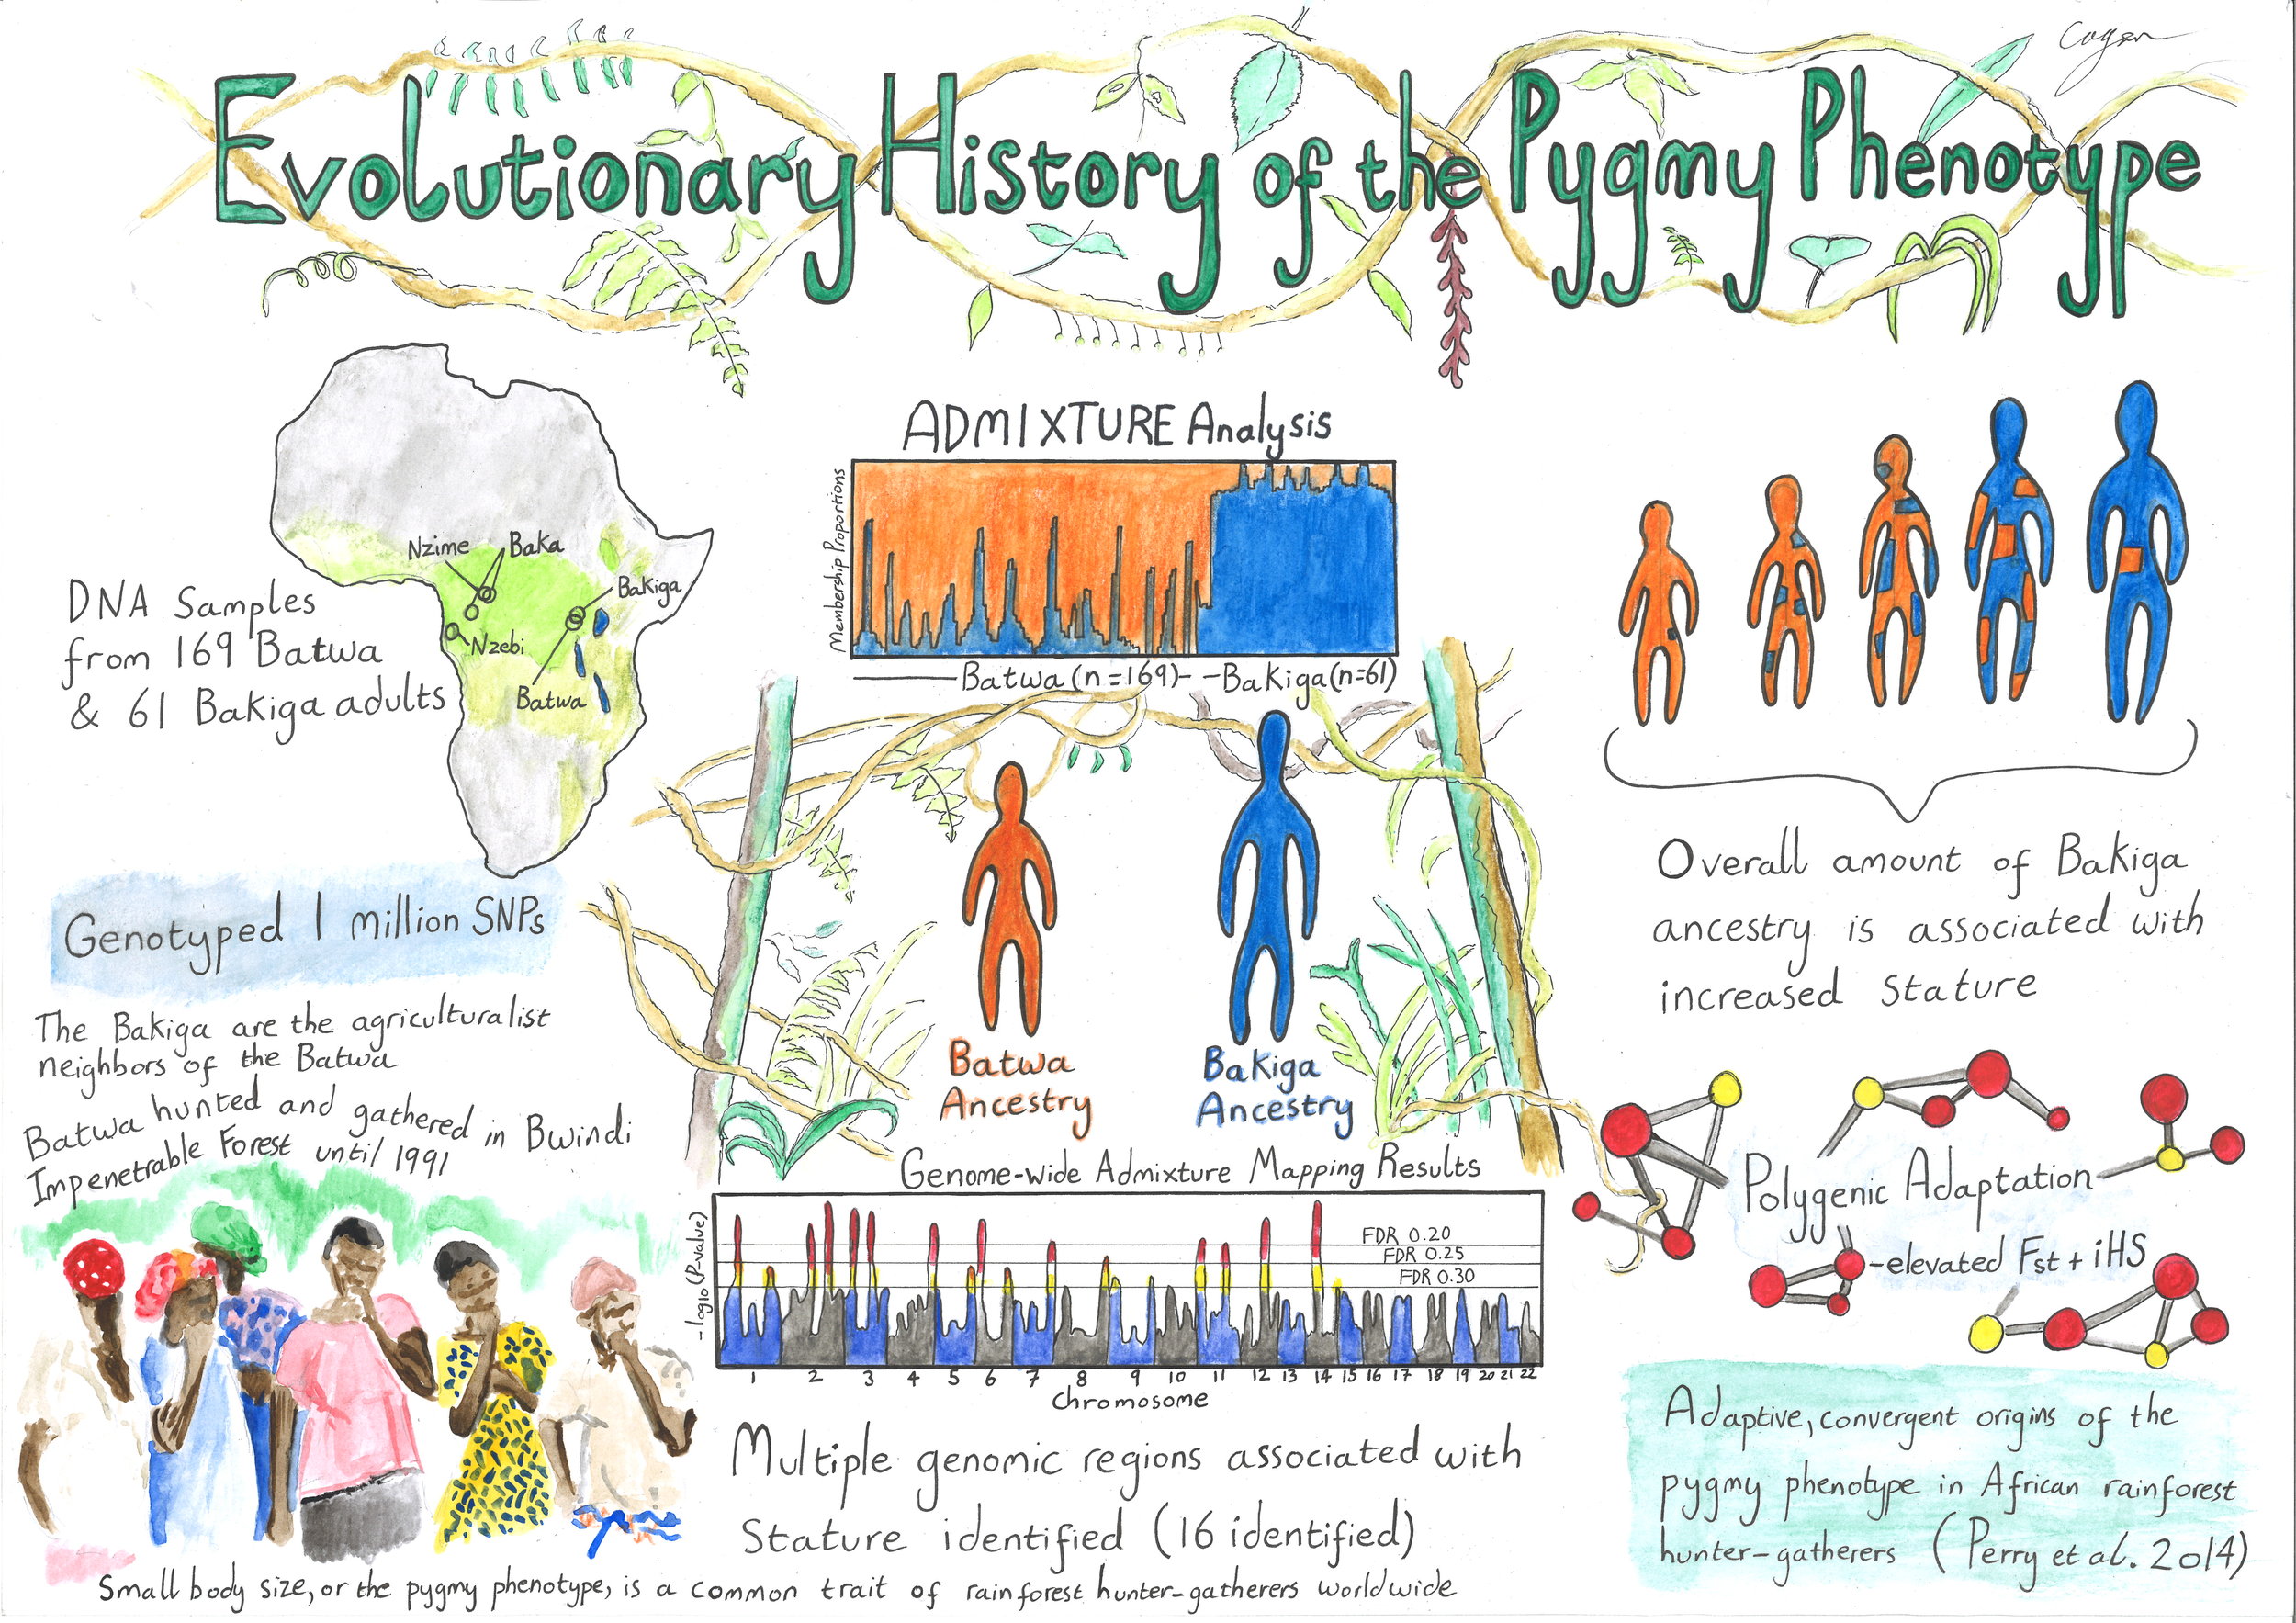 Cagan illustration of Perry et al. 2014 (Batwa pygmy phenotype).jpg